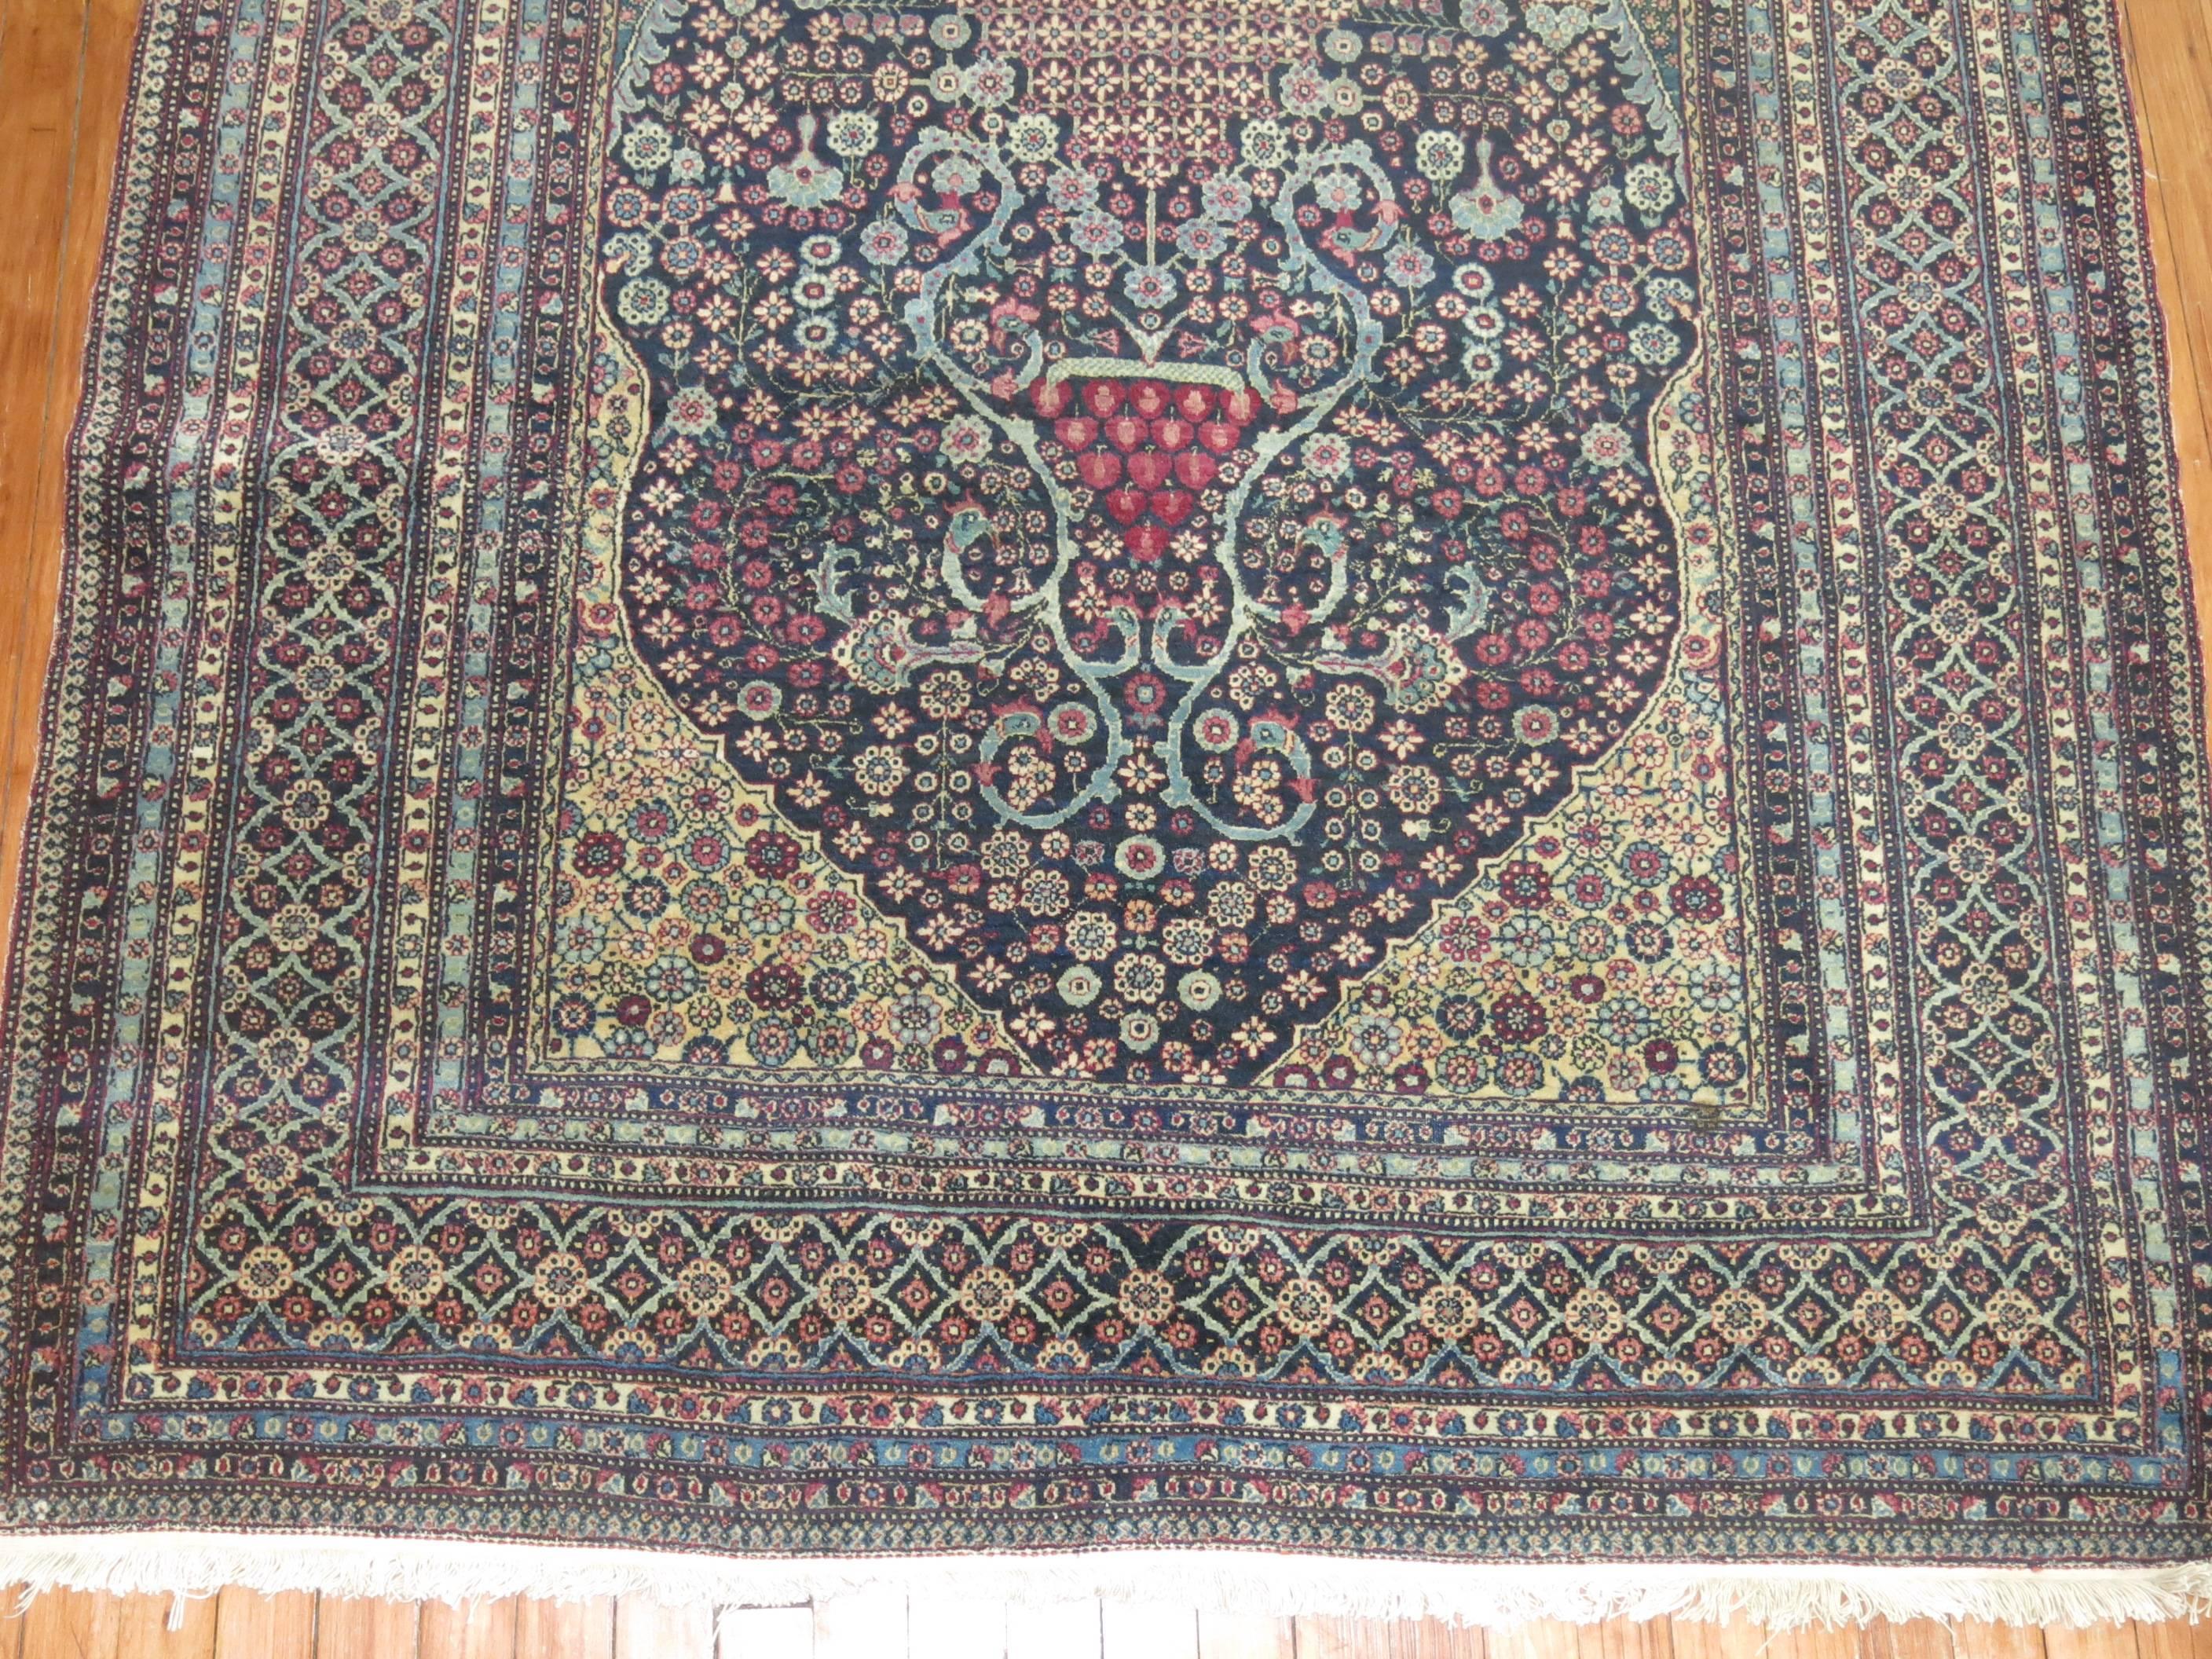 teheran carpets